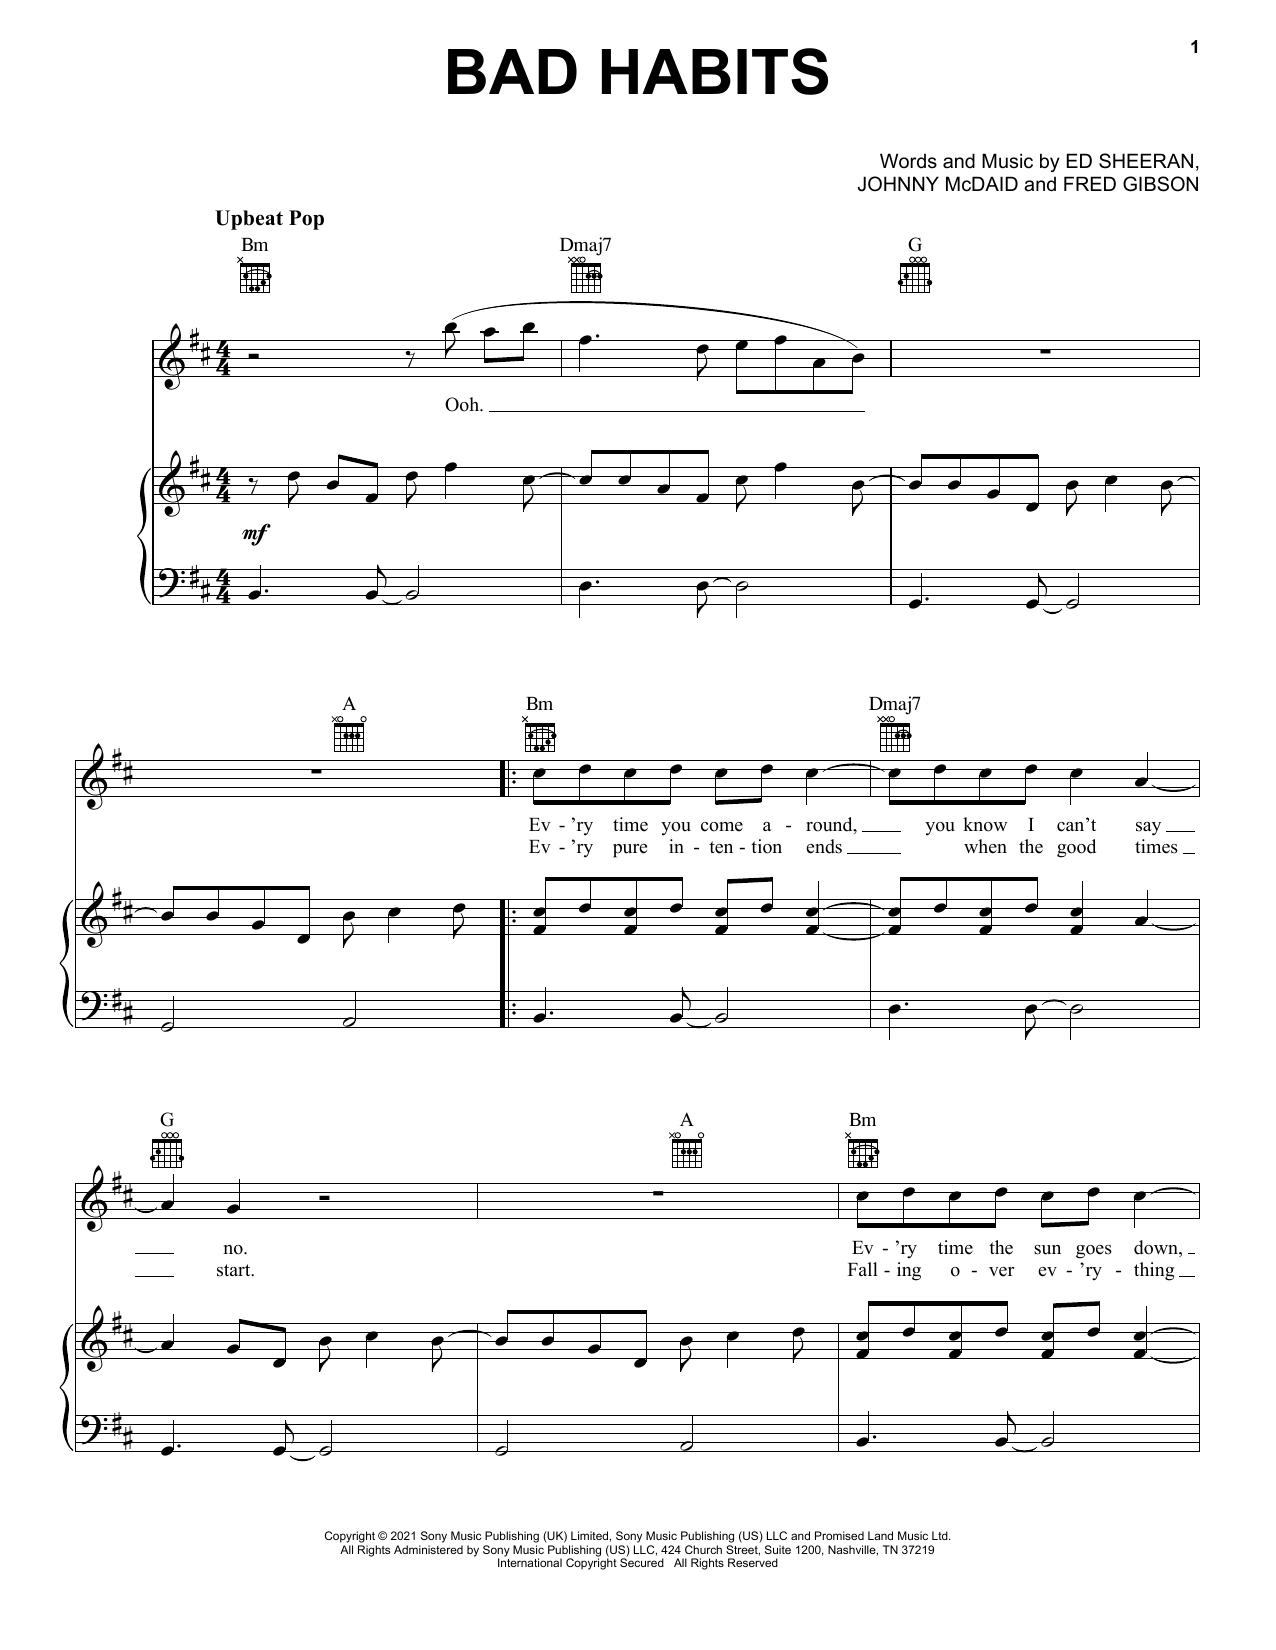 Ed Sheeran Bad Habits Sheet Music Notes & Chords for Trumpet Duet - Download or Print PDF